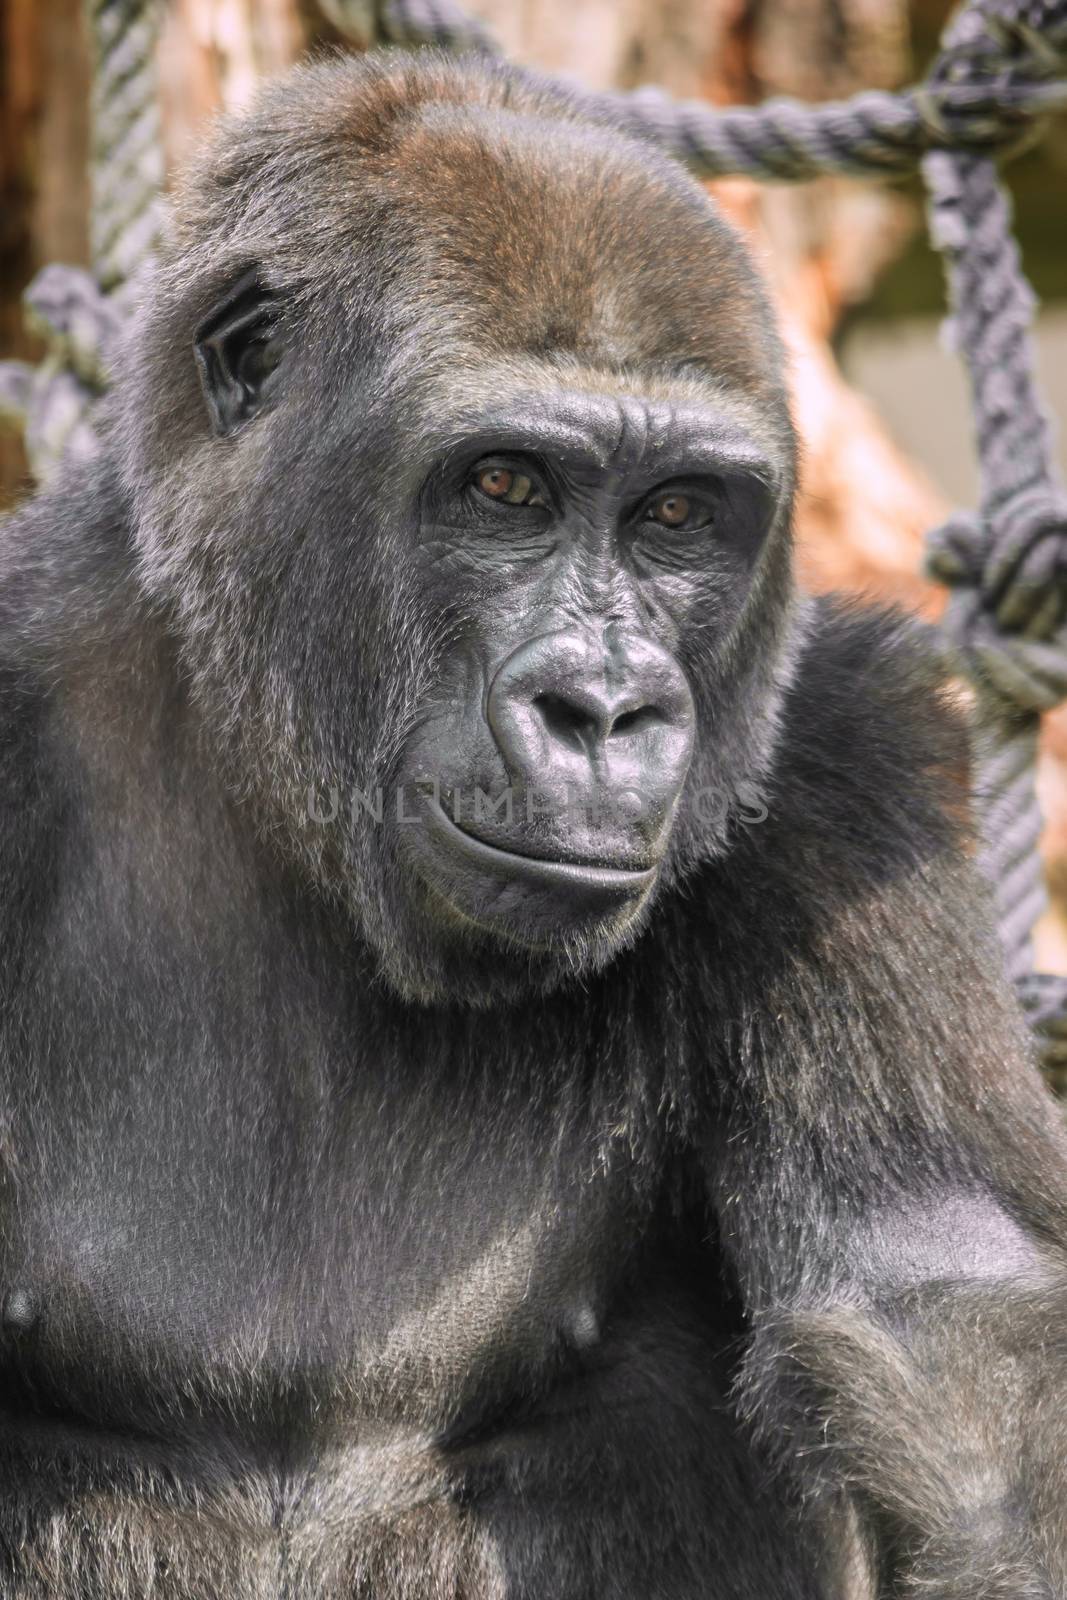 Young gorilla portrait by Digoarpi